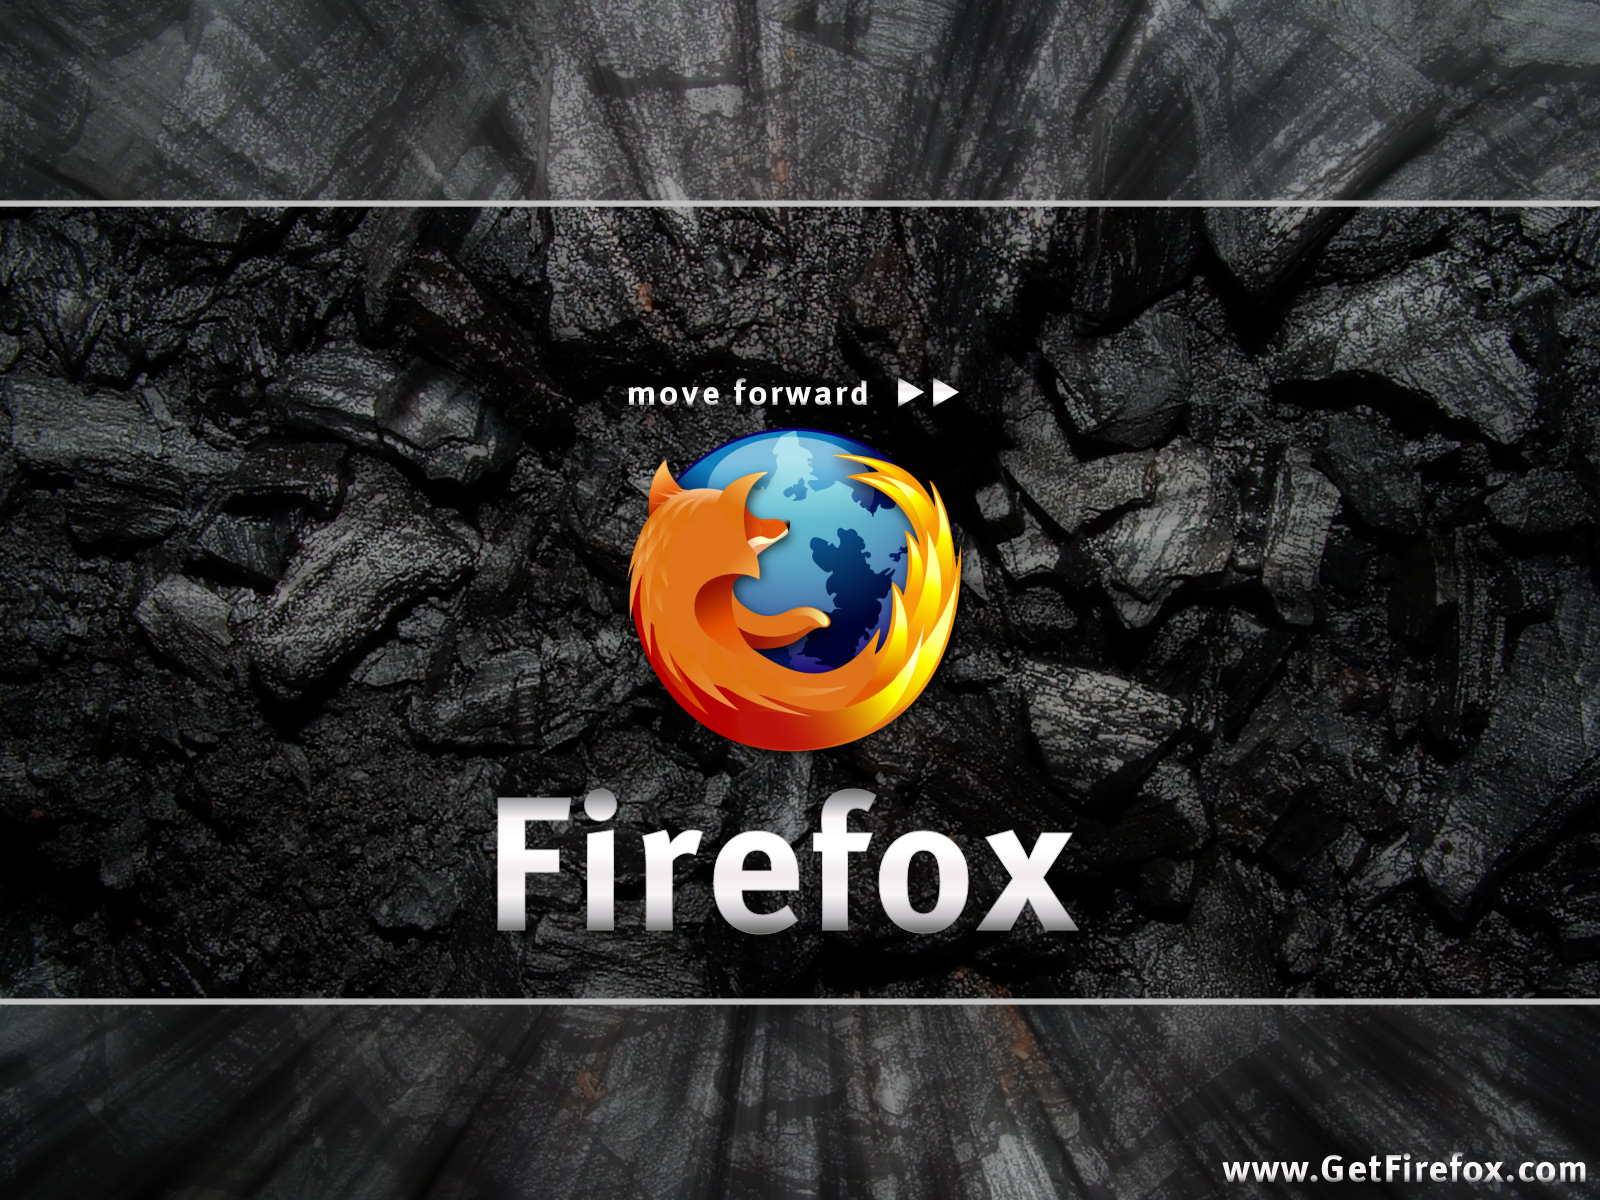 Firefox Wallpaper Themes Best Image